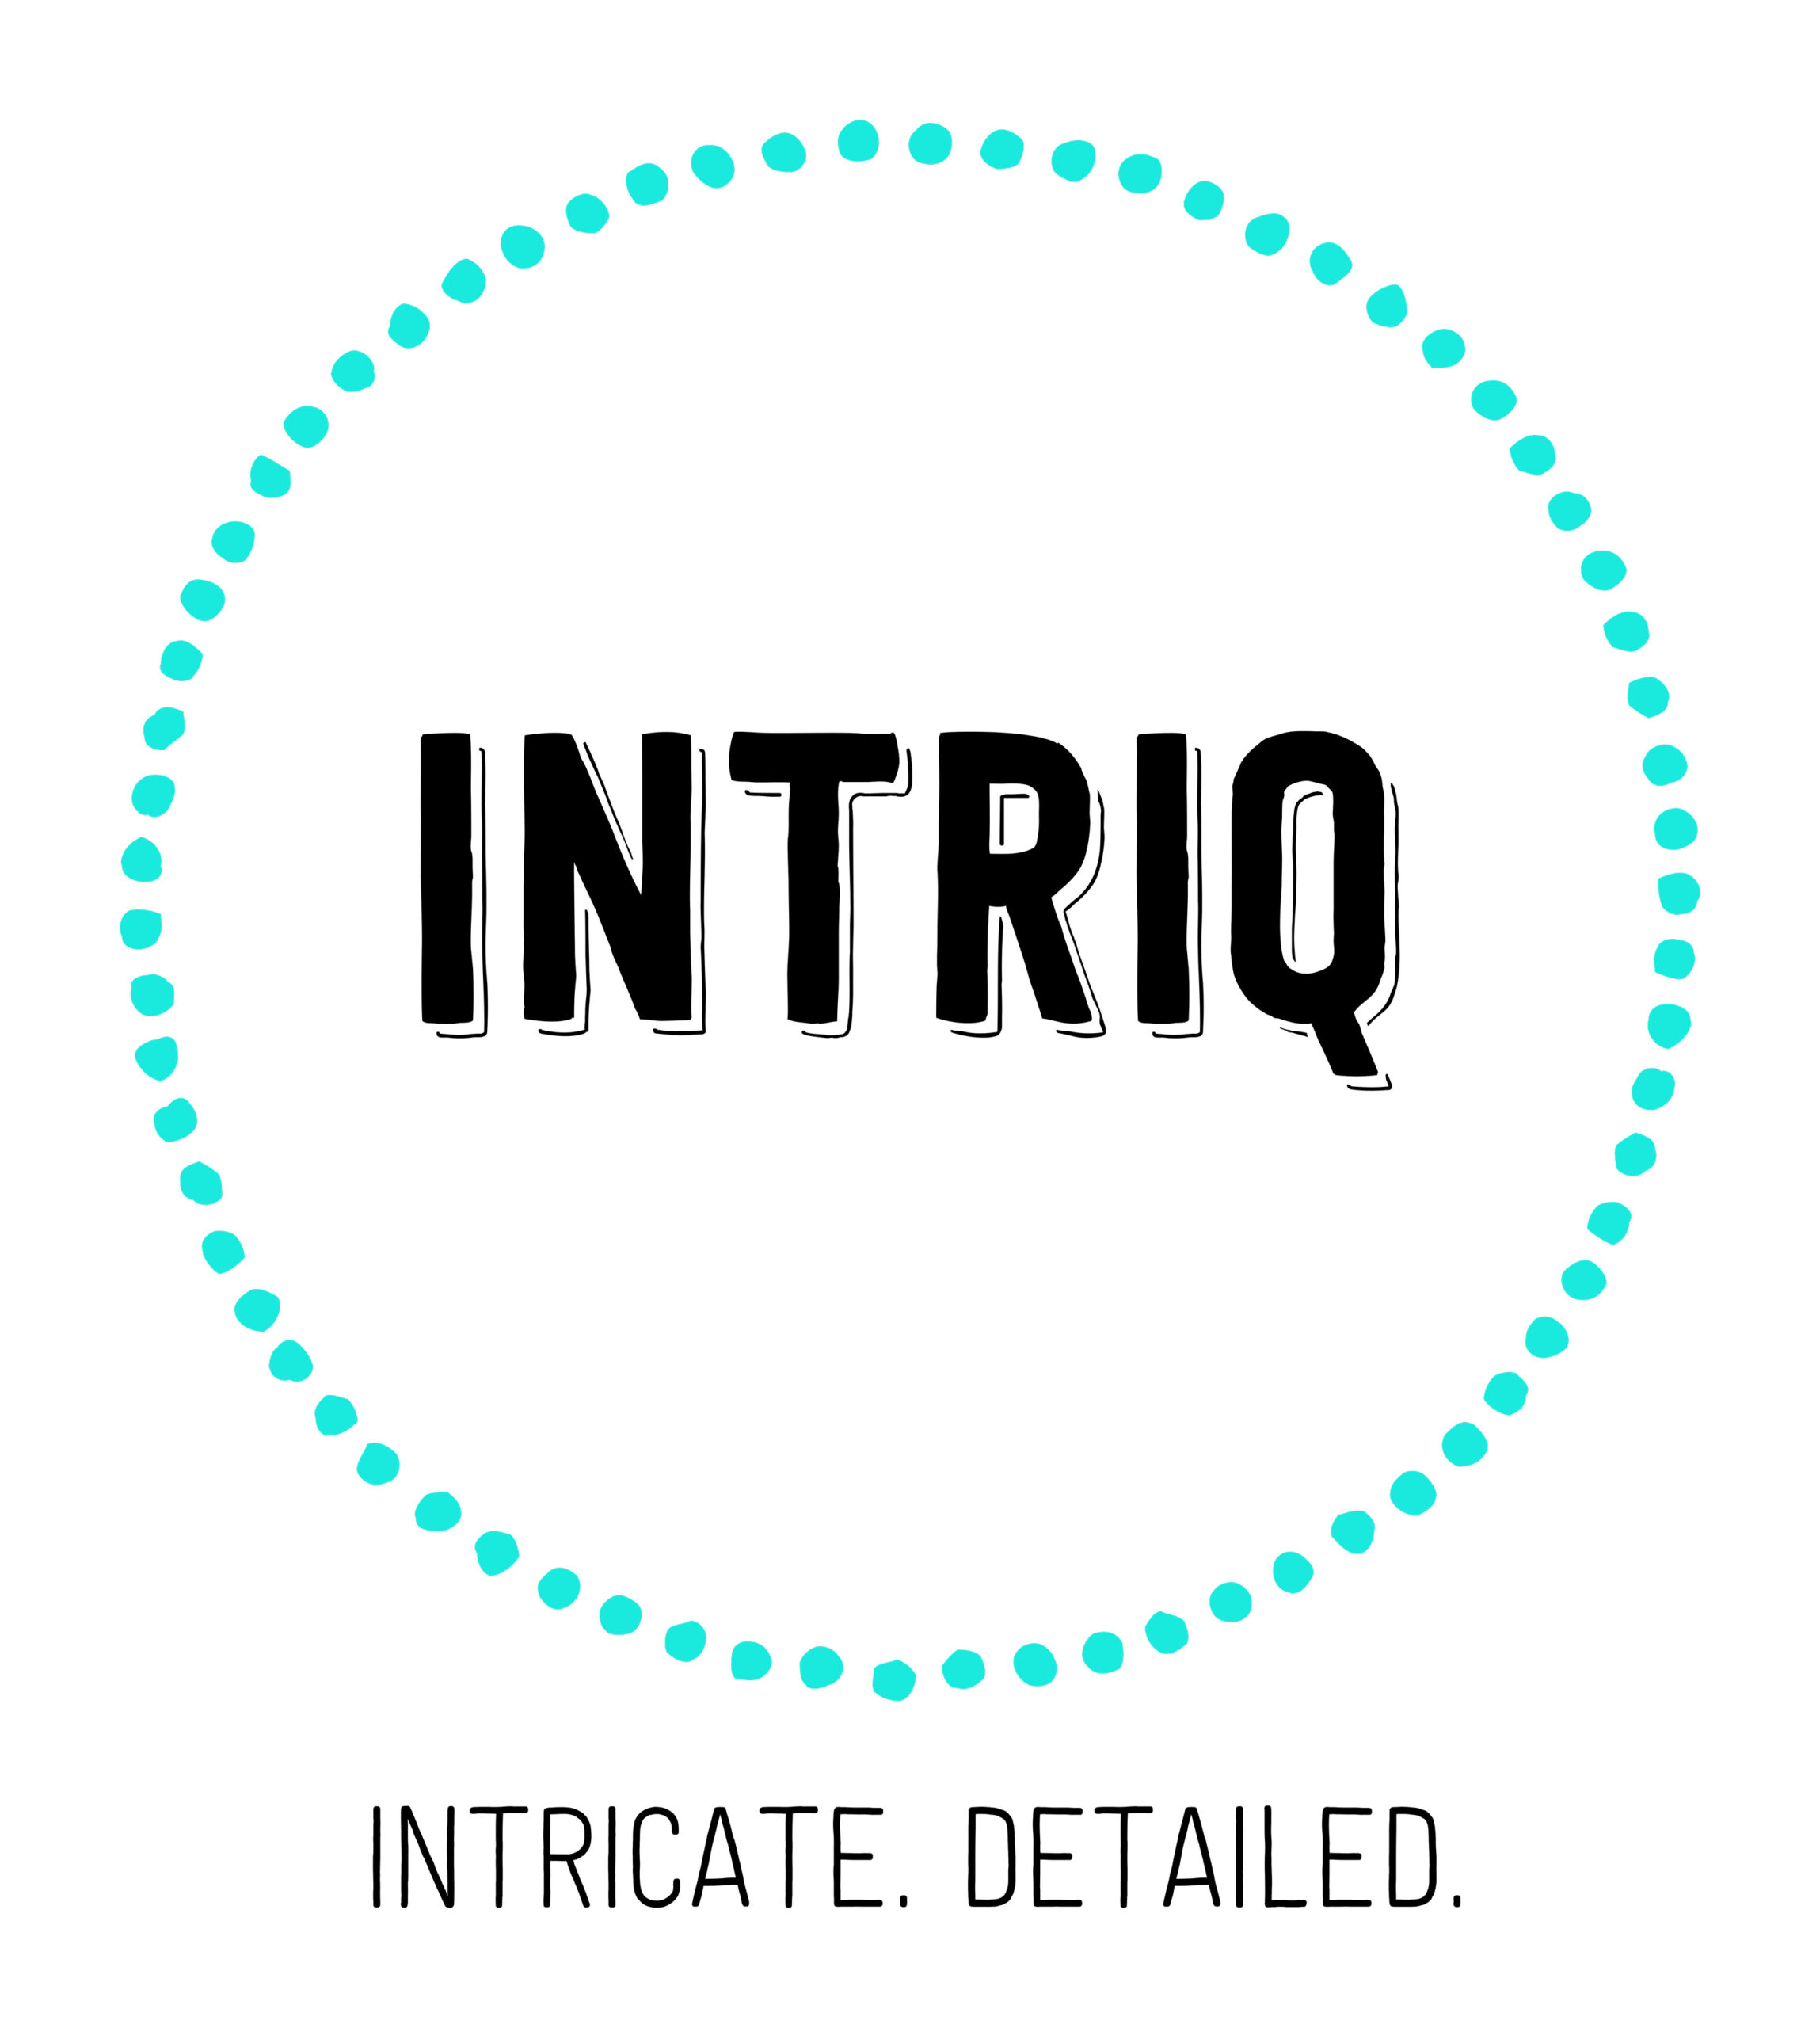 Intriq, LLC